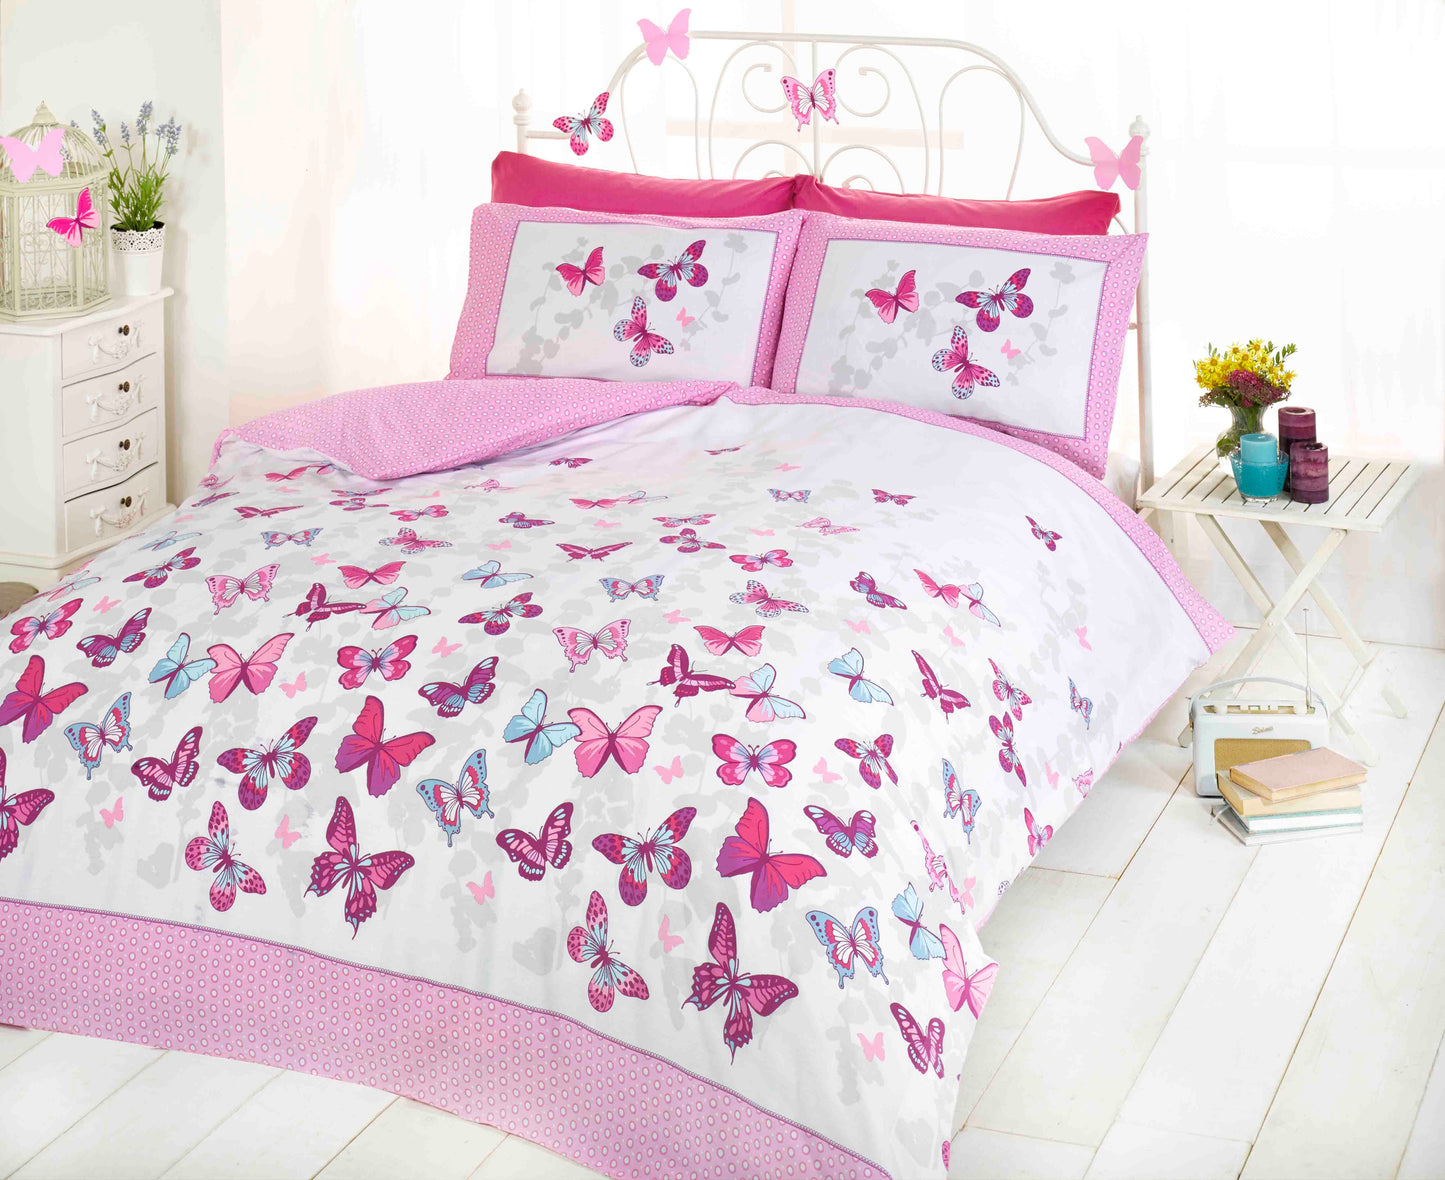 Butterfly Flutter Pink Bedding Sets